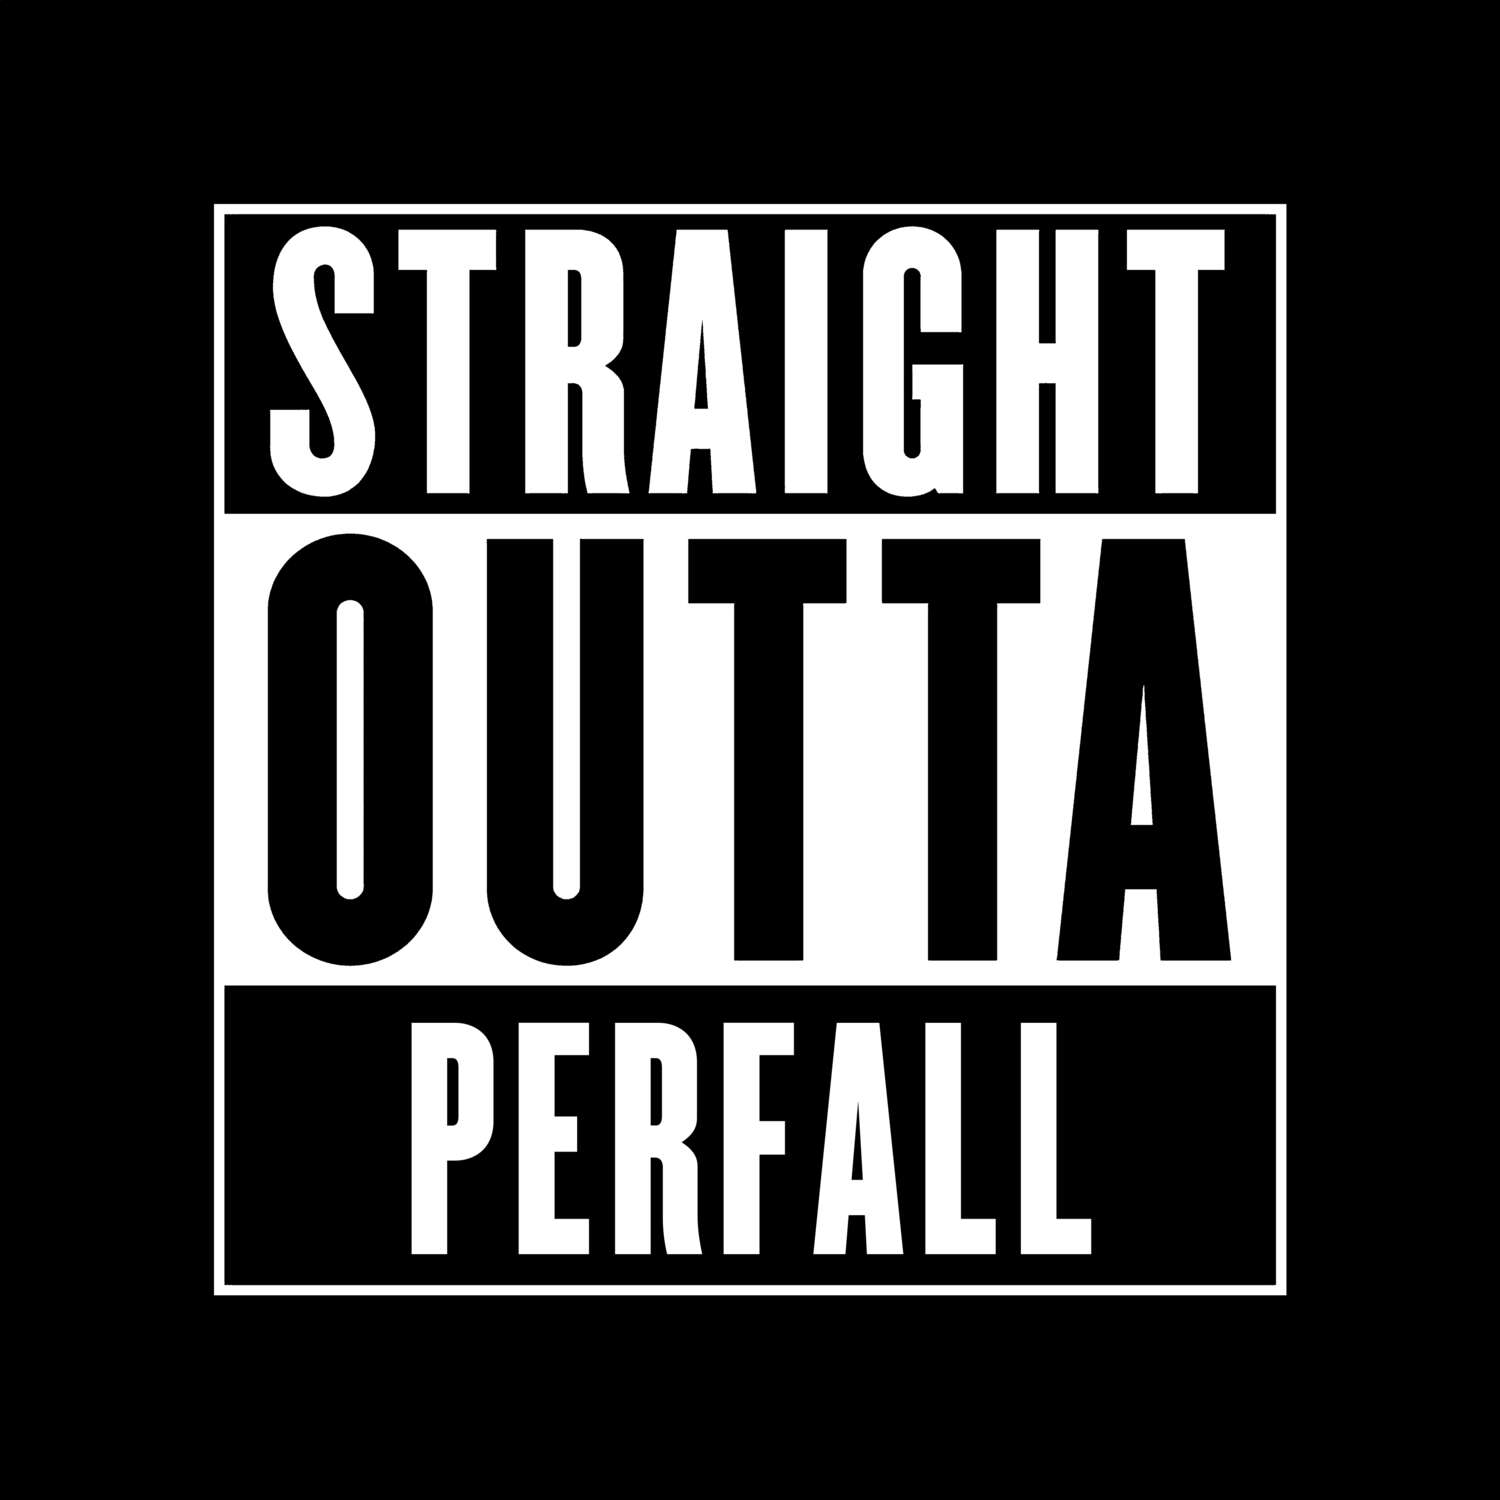 Perfall T-Shirt »Straight Outta«